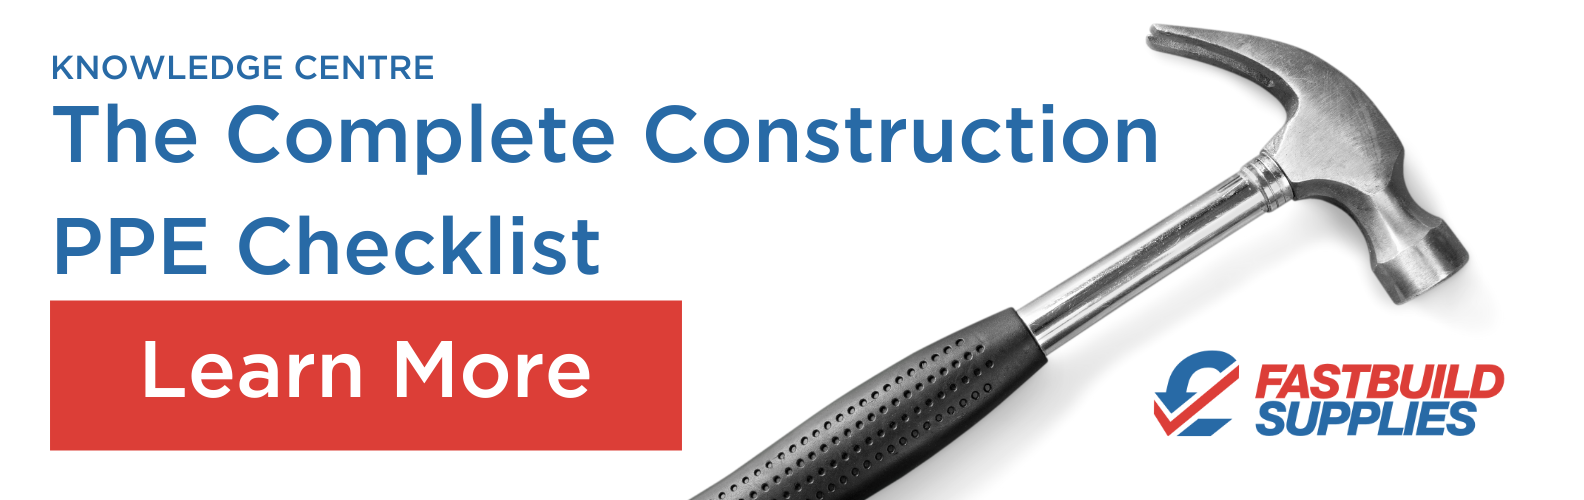 Knowledge centre: the complete construction PPE checklist